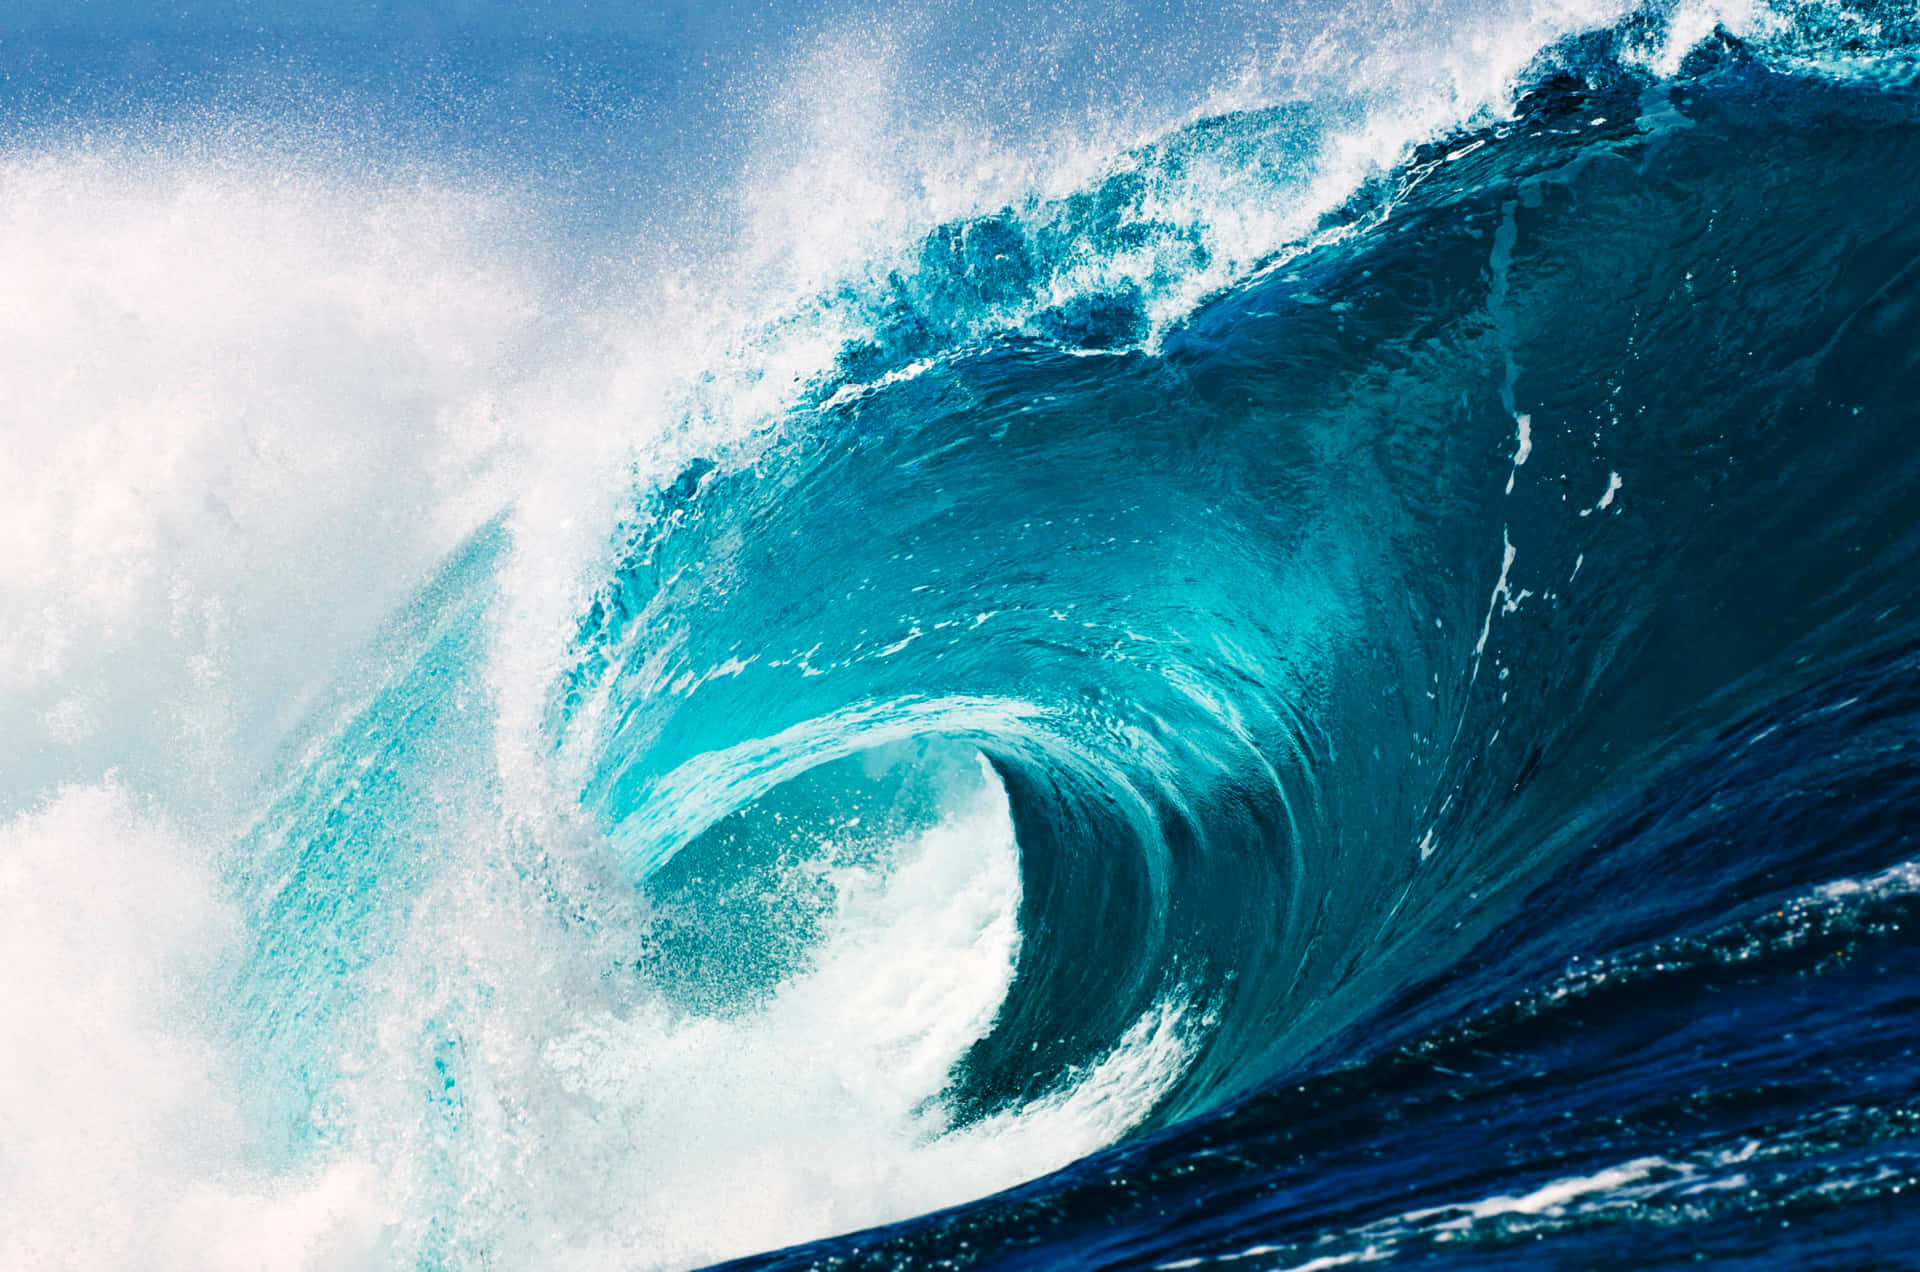 Large Sea Waves Crashing Aesthetic Picture